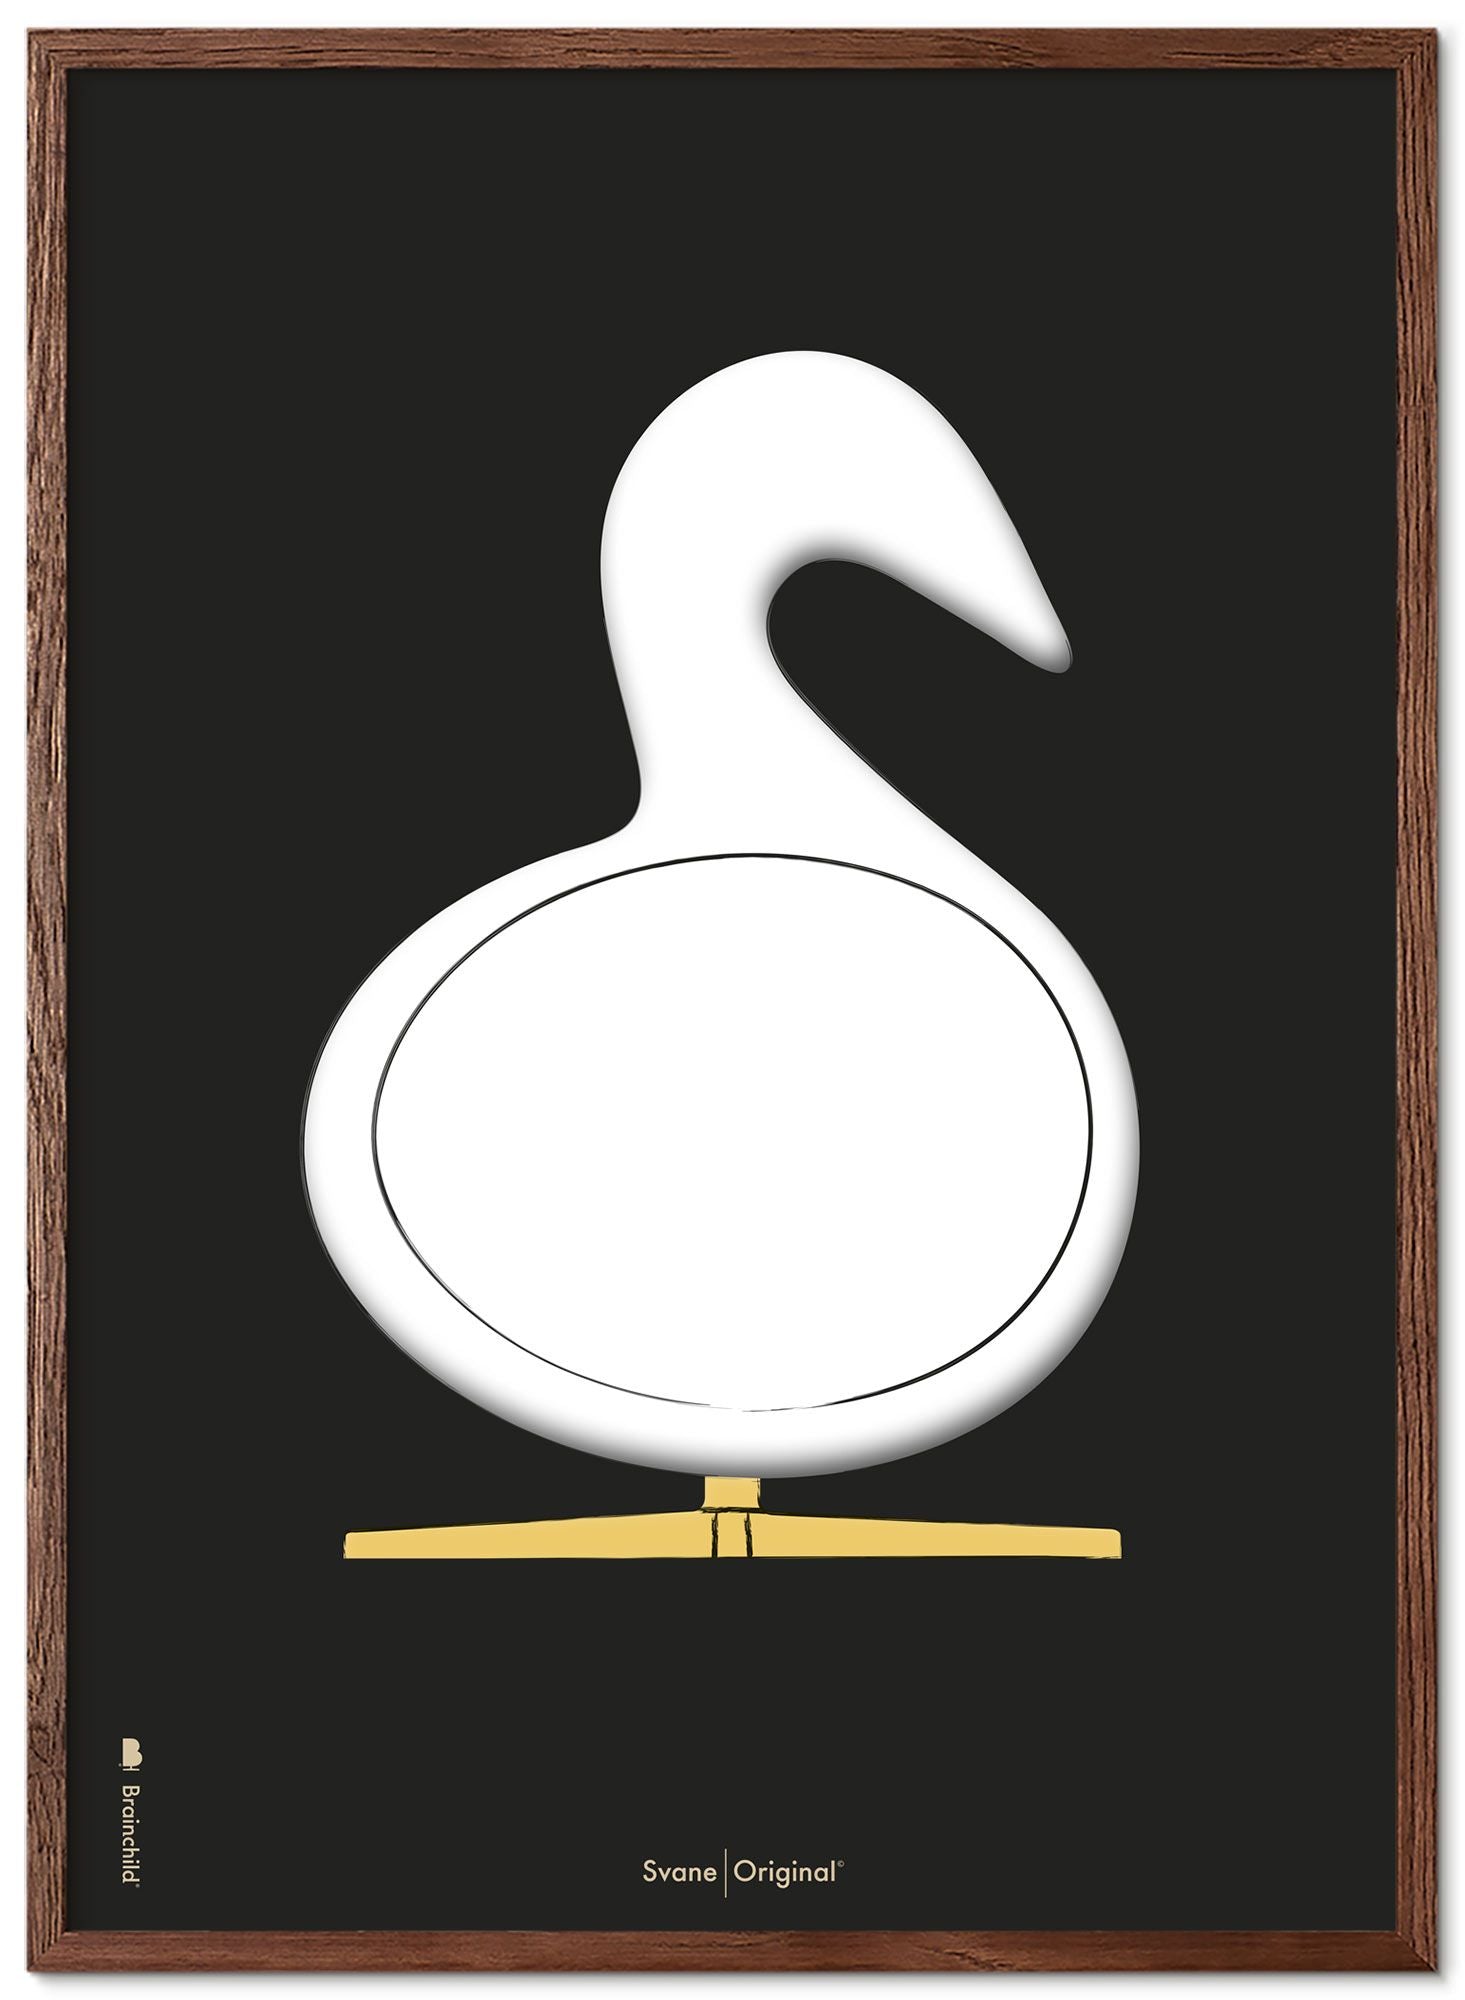 Brainchild Swan Design Sketch Poster Frame Made Of Dark Wood 30x40 Cm, Black Background